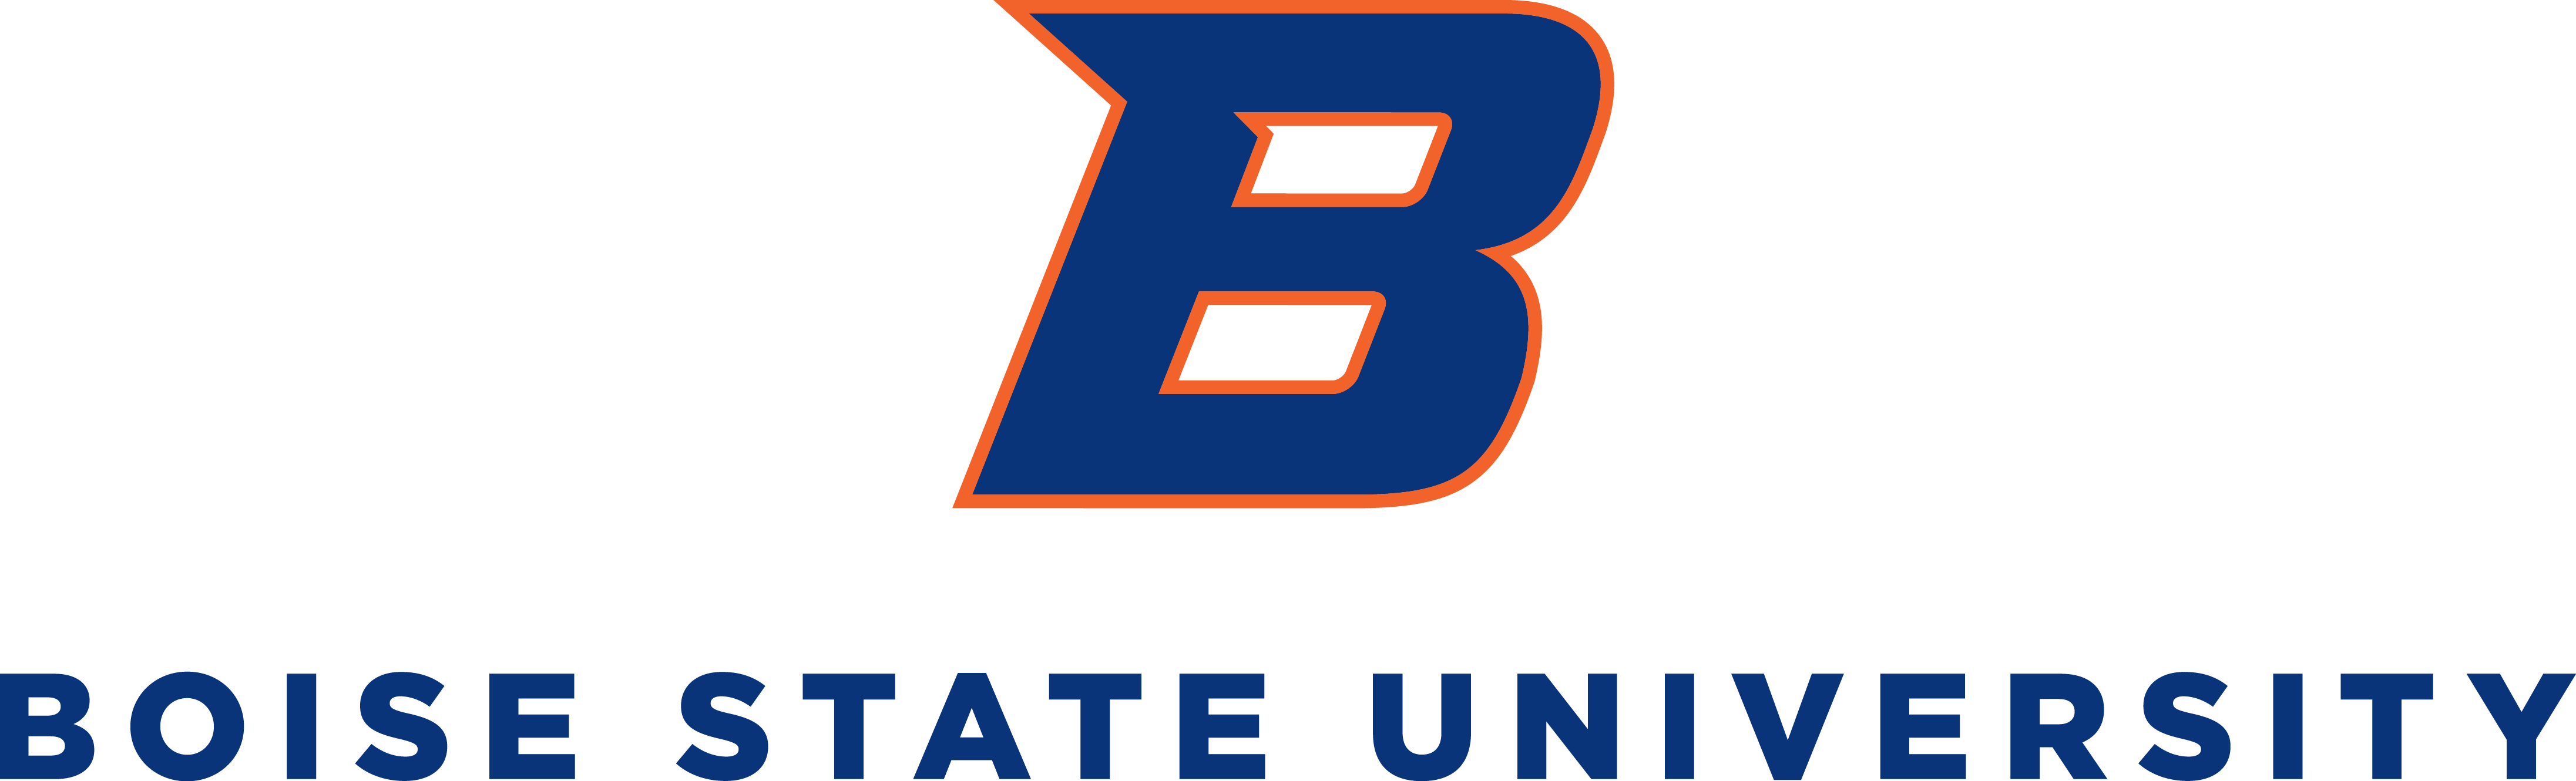 boise_state_university_logo.png